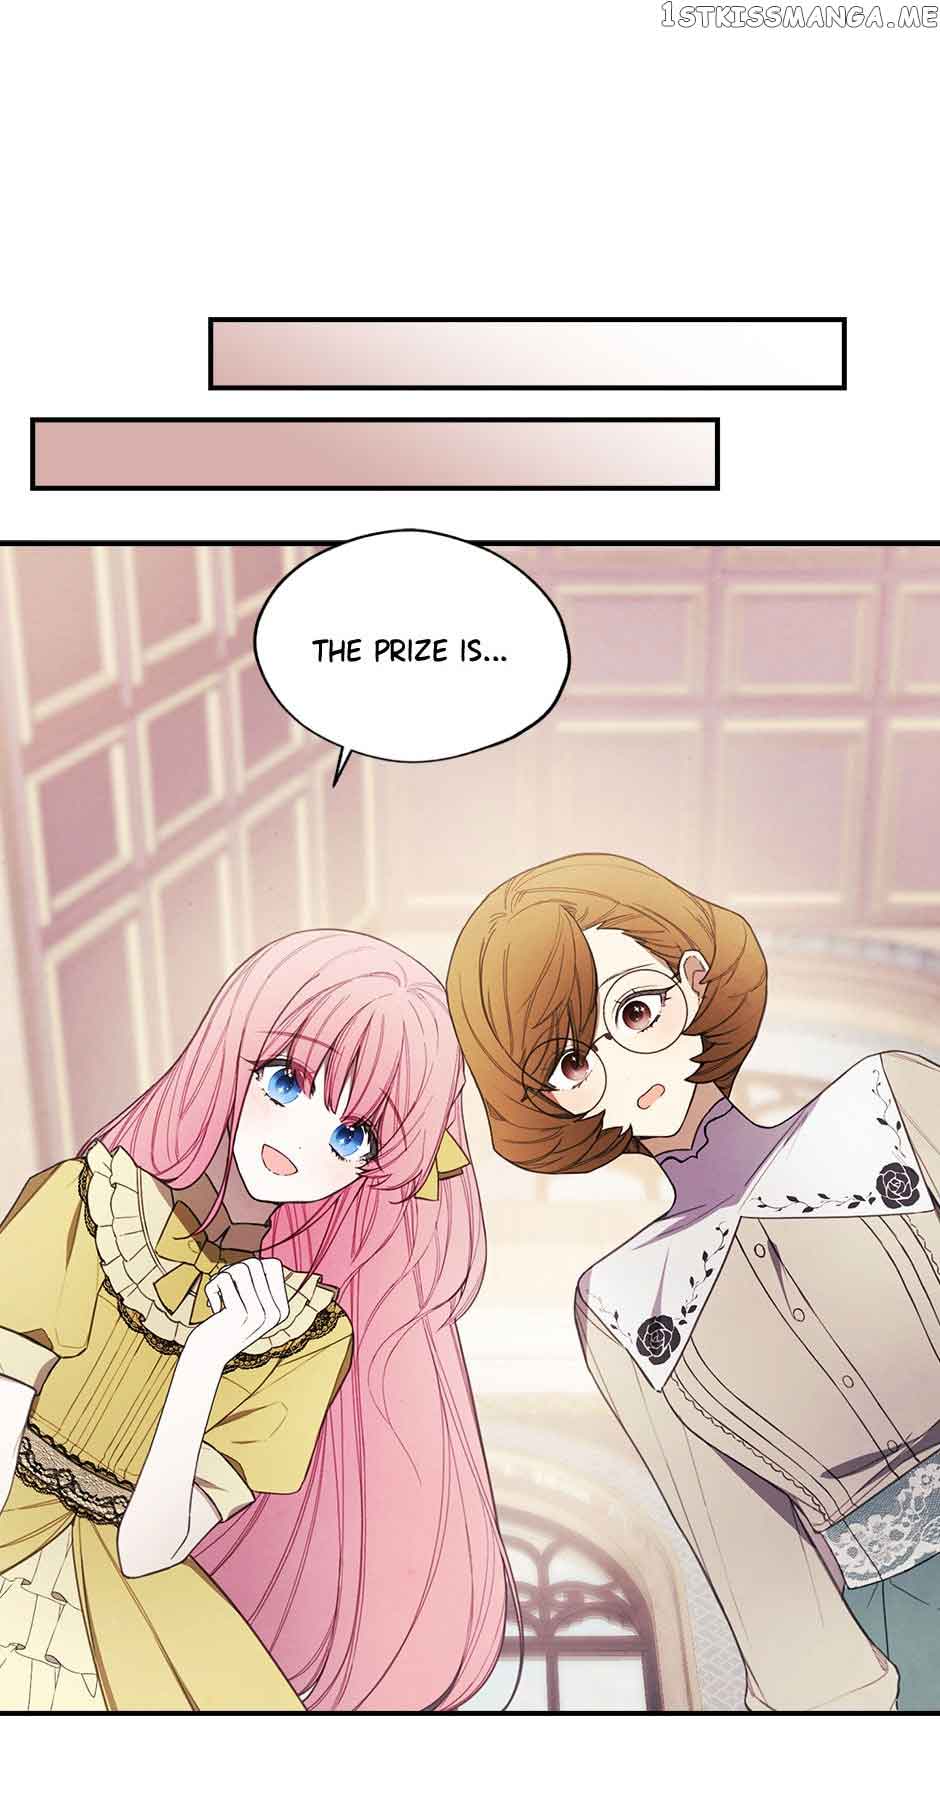 Princess’s Doll Shop chapter 46